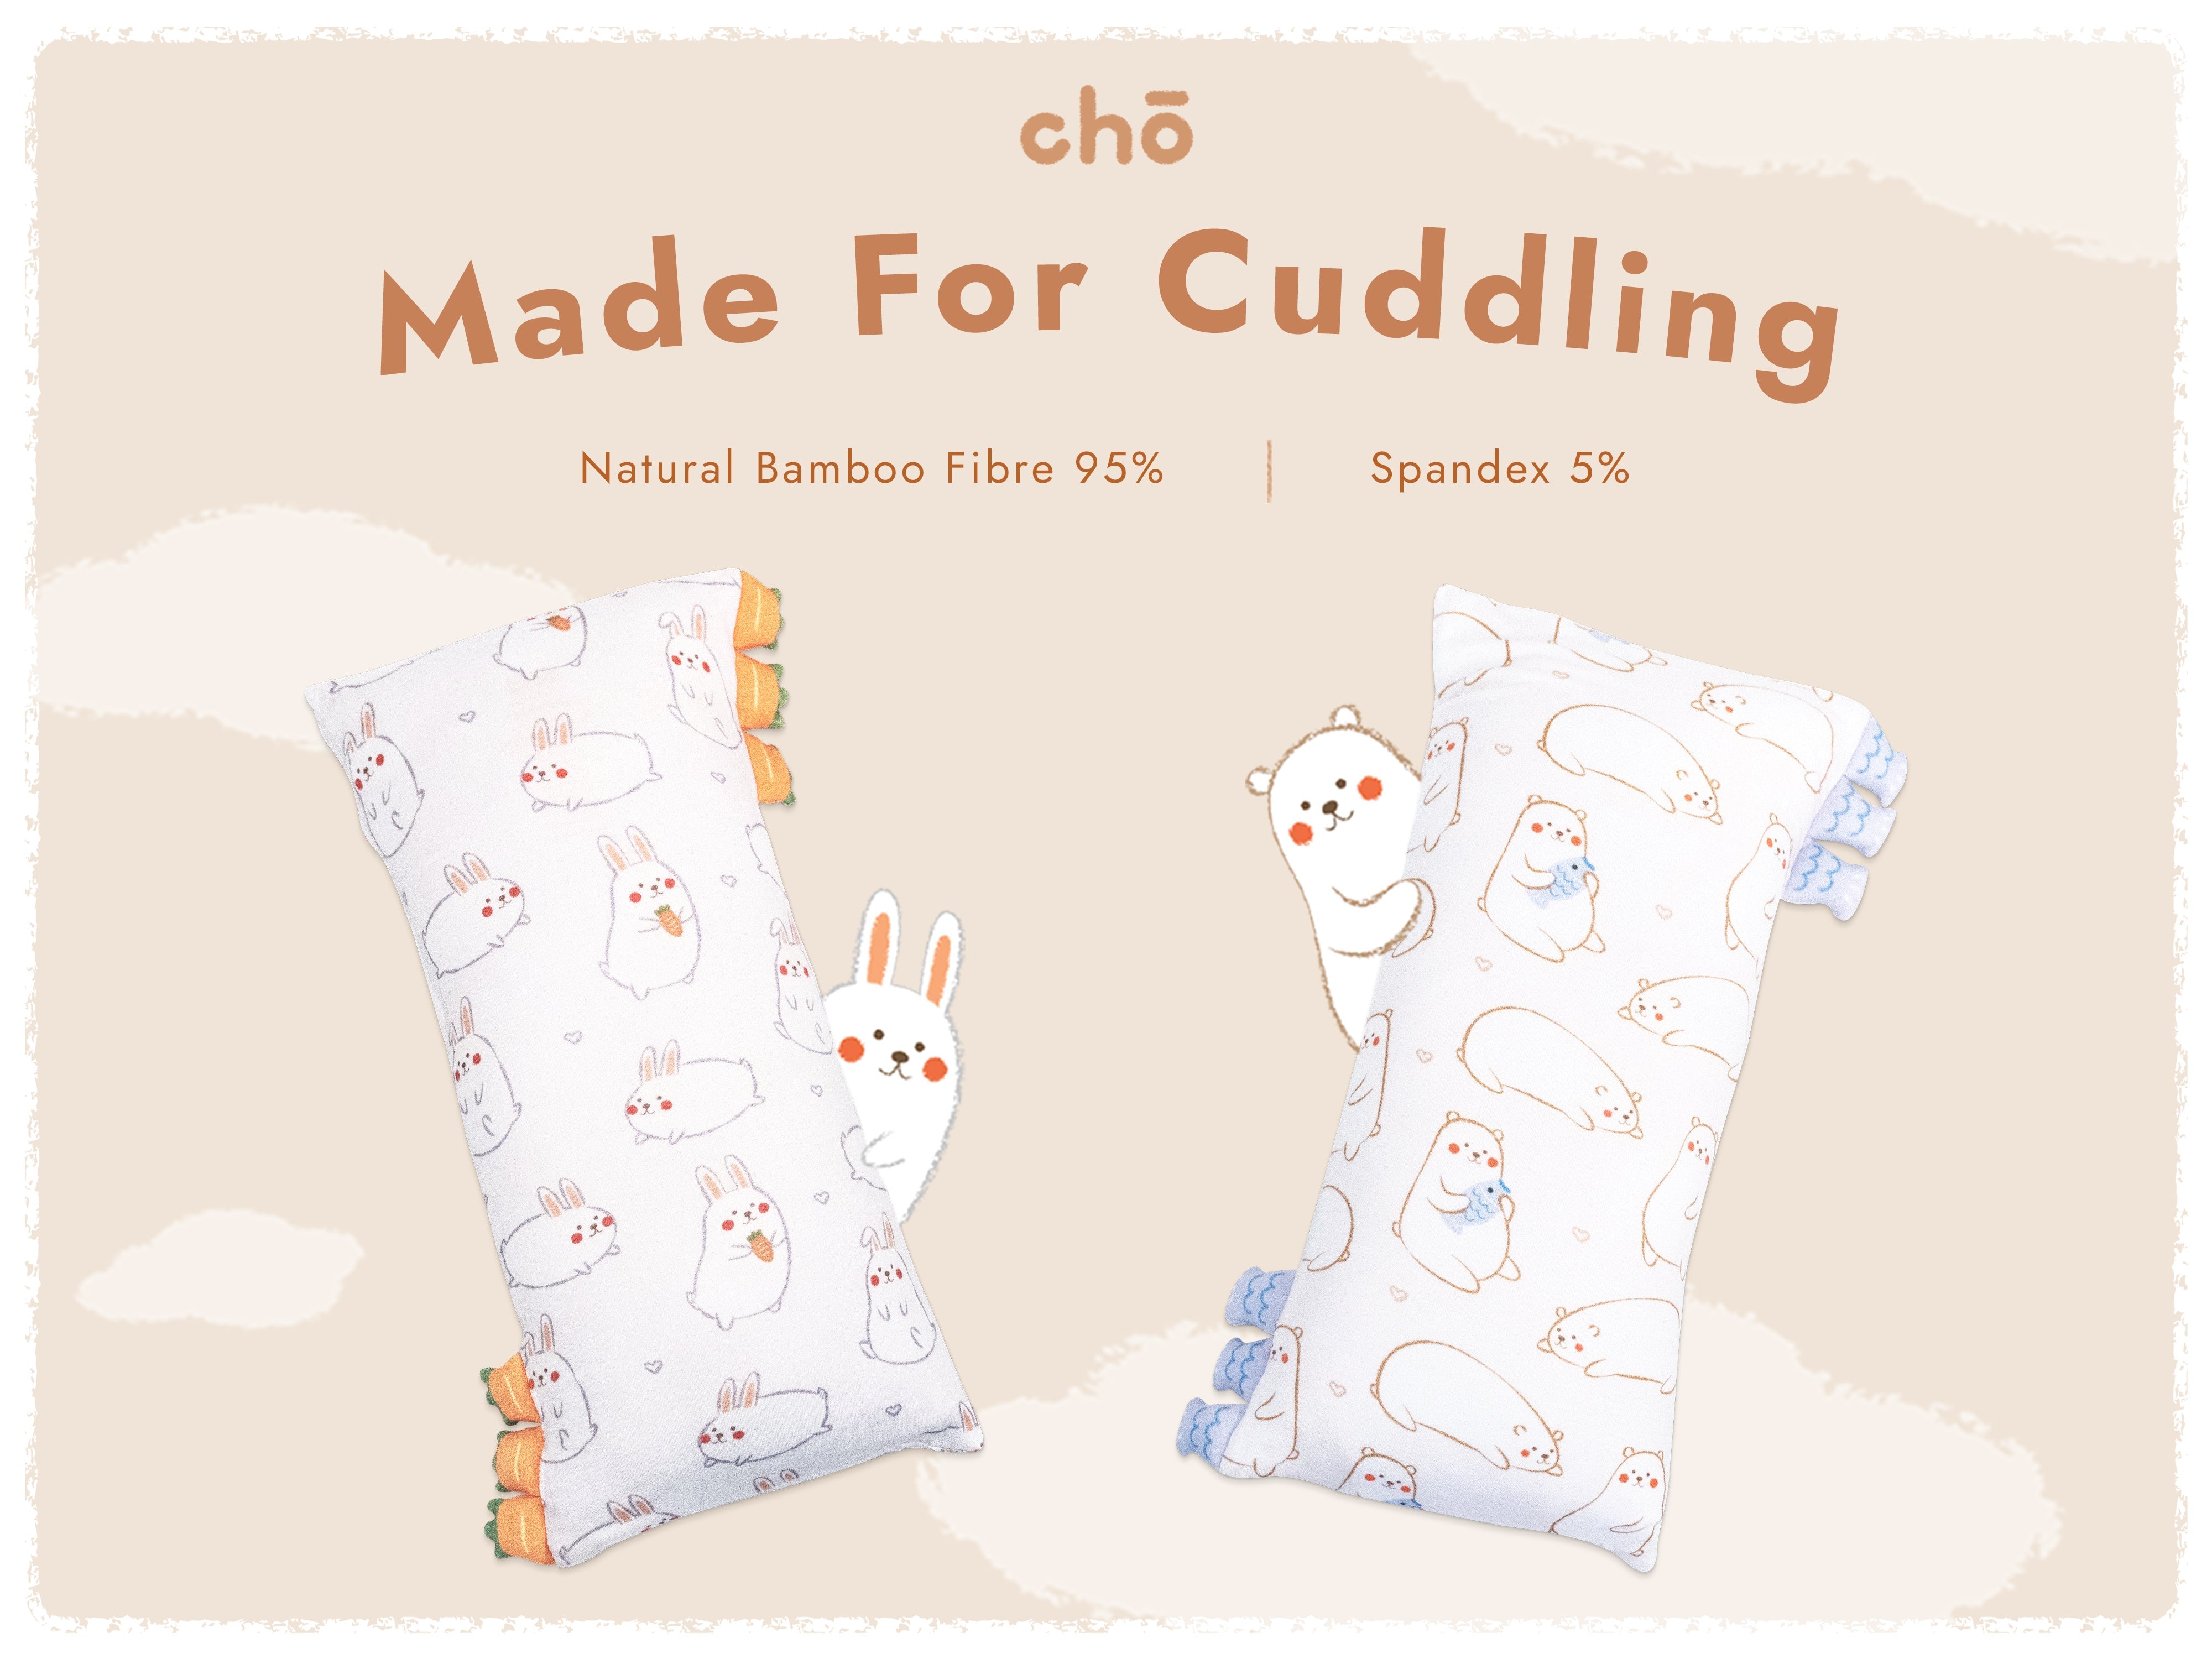 [EXTRA COVER] Cho Snuggy Buddy Pillow (Maru Bear: XL 31 x 86cm)